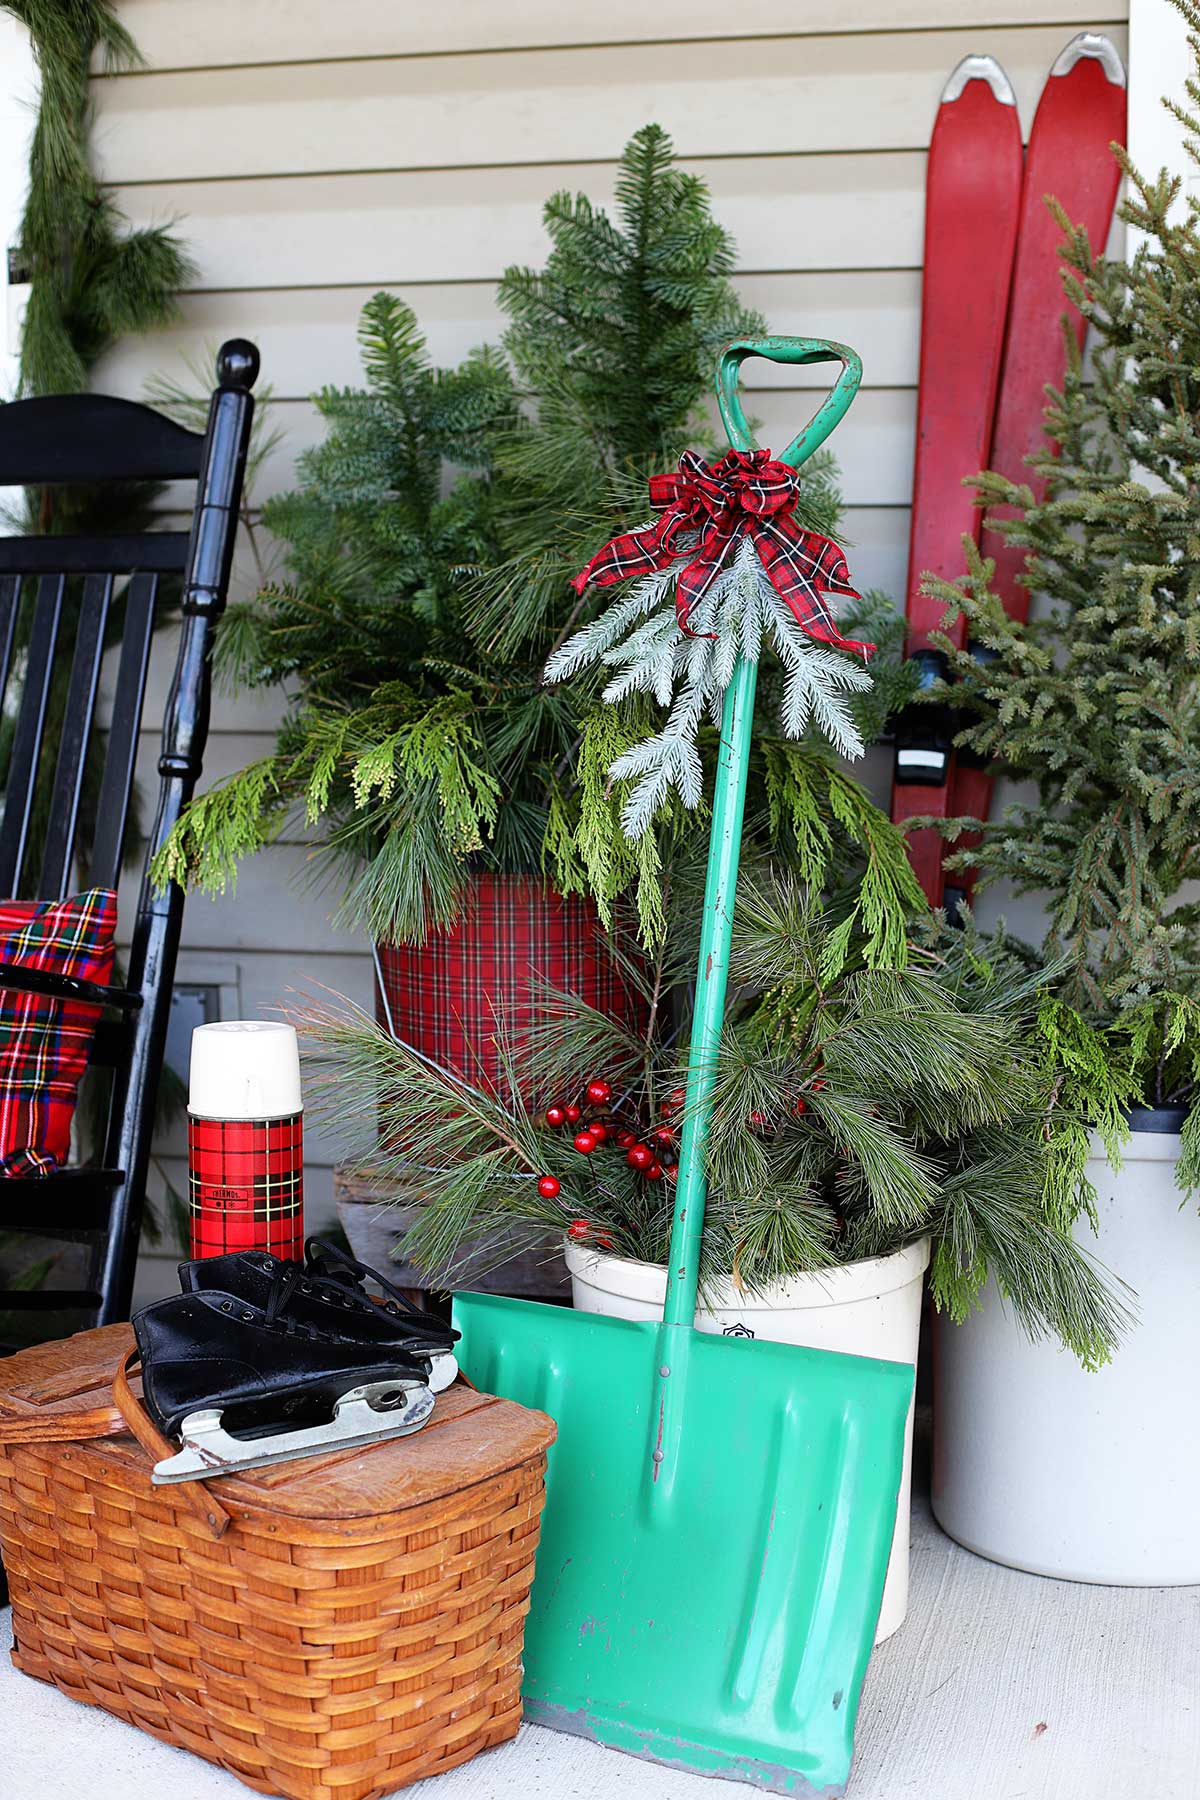 vintage skates, snow shovel and picnic basket on porch for Christmas decor